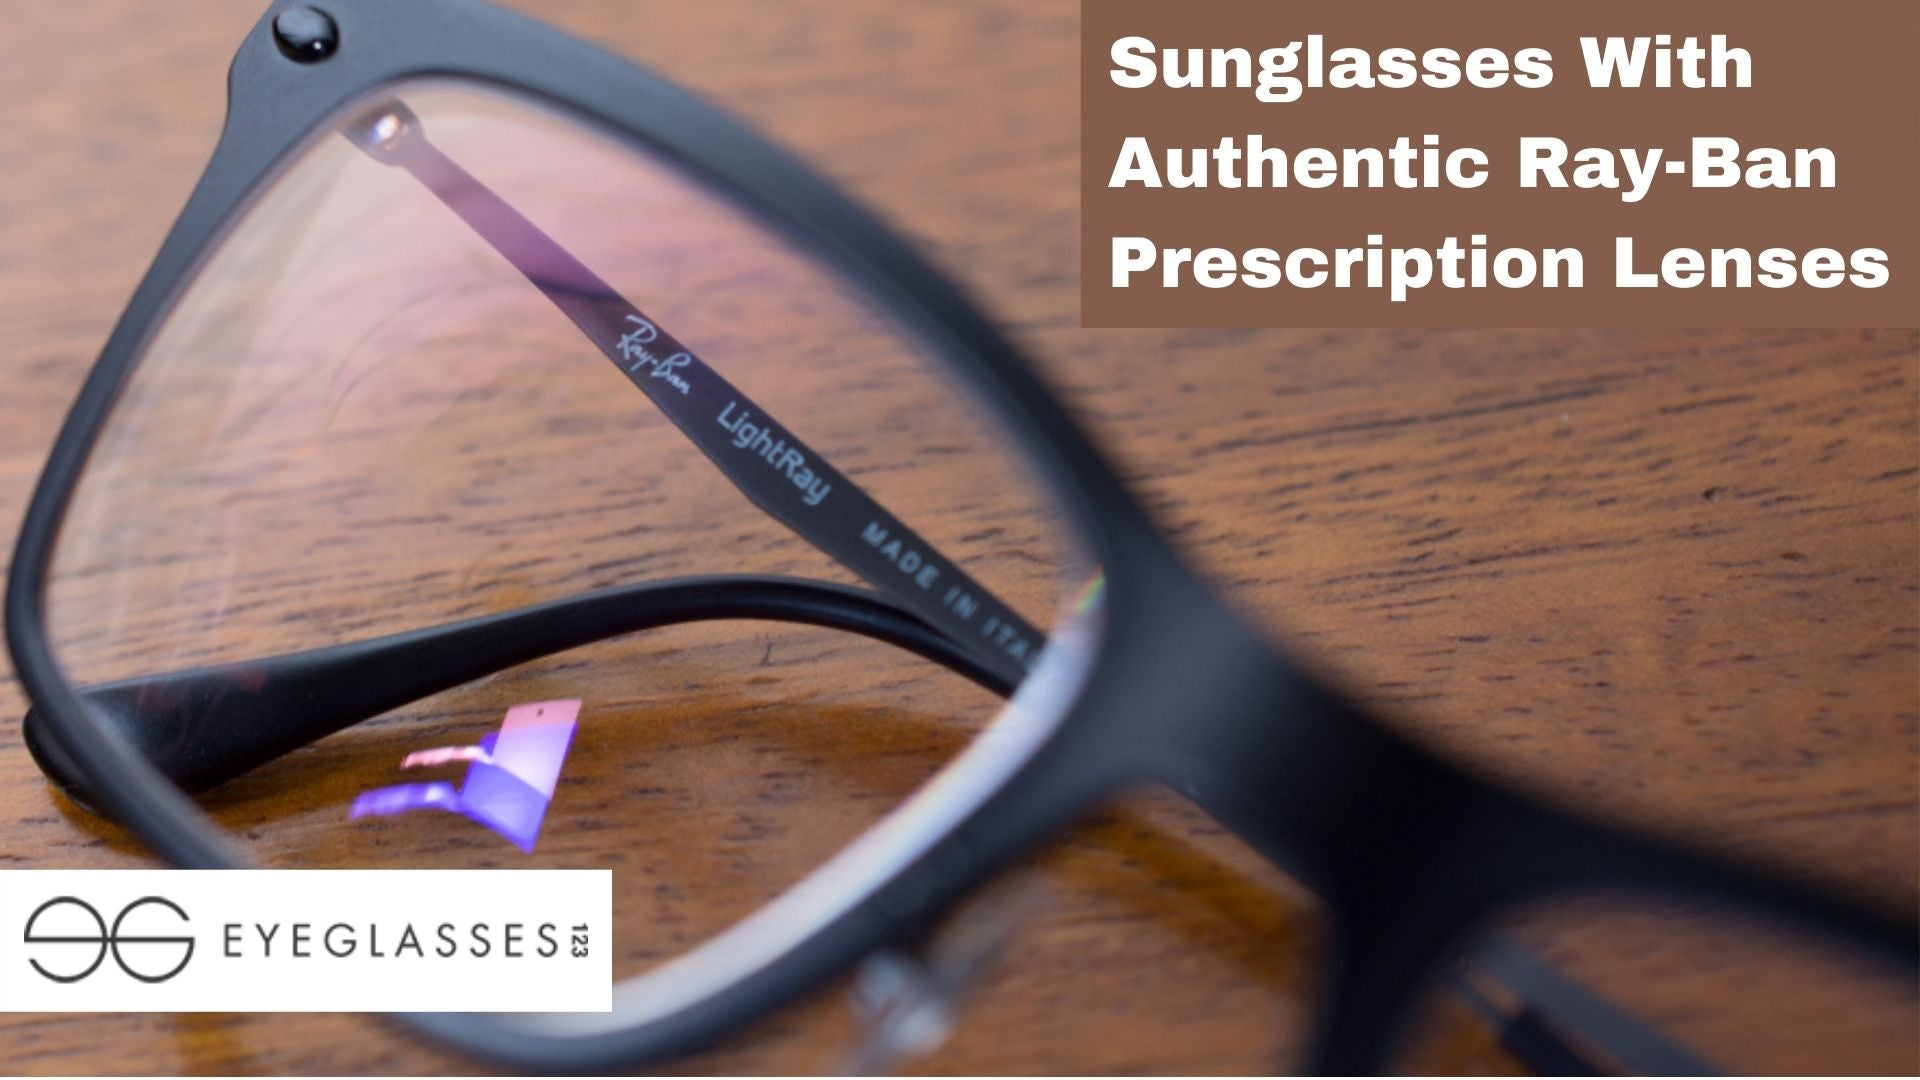 Sunglasses With Authentic Ray-Ban Prescription Lenses